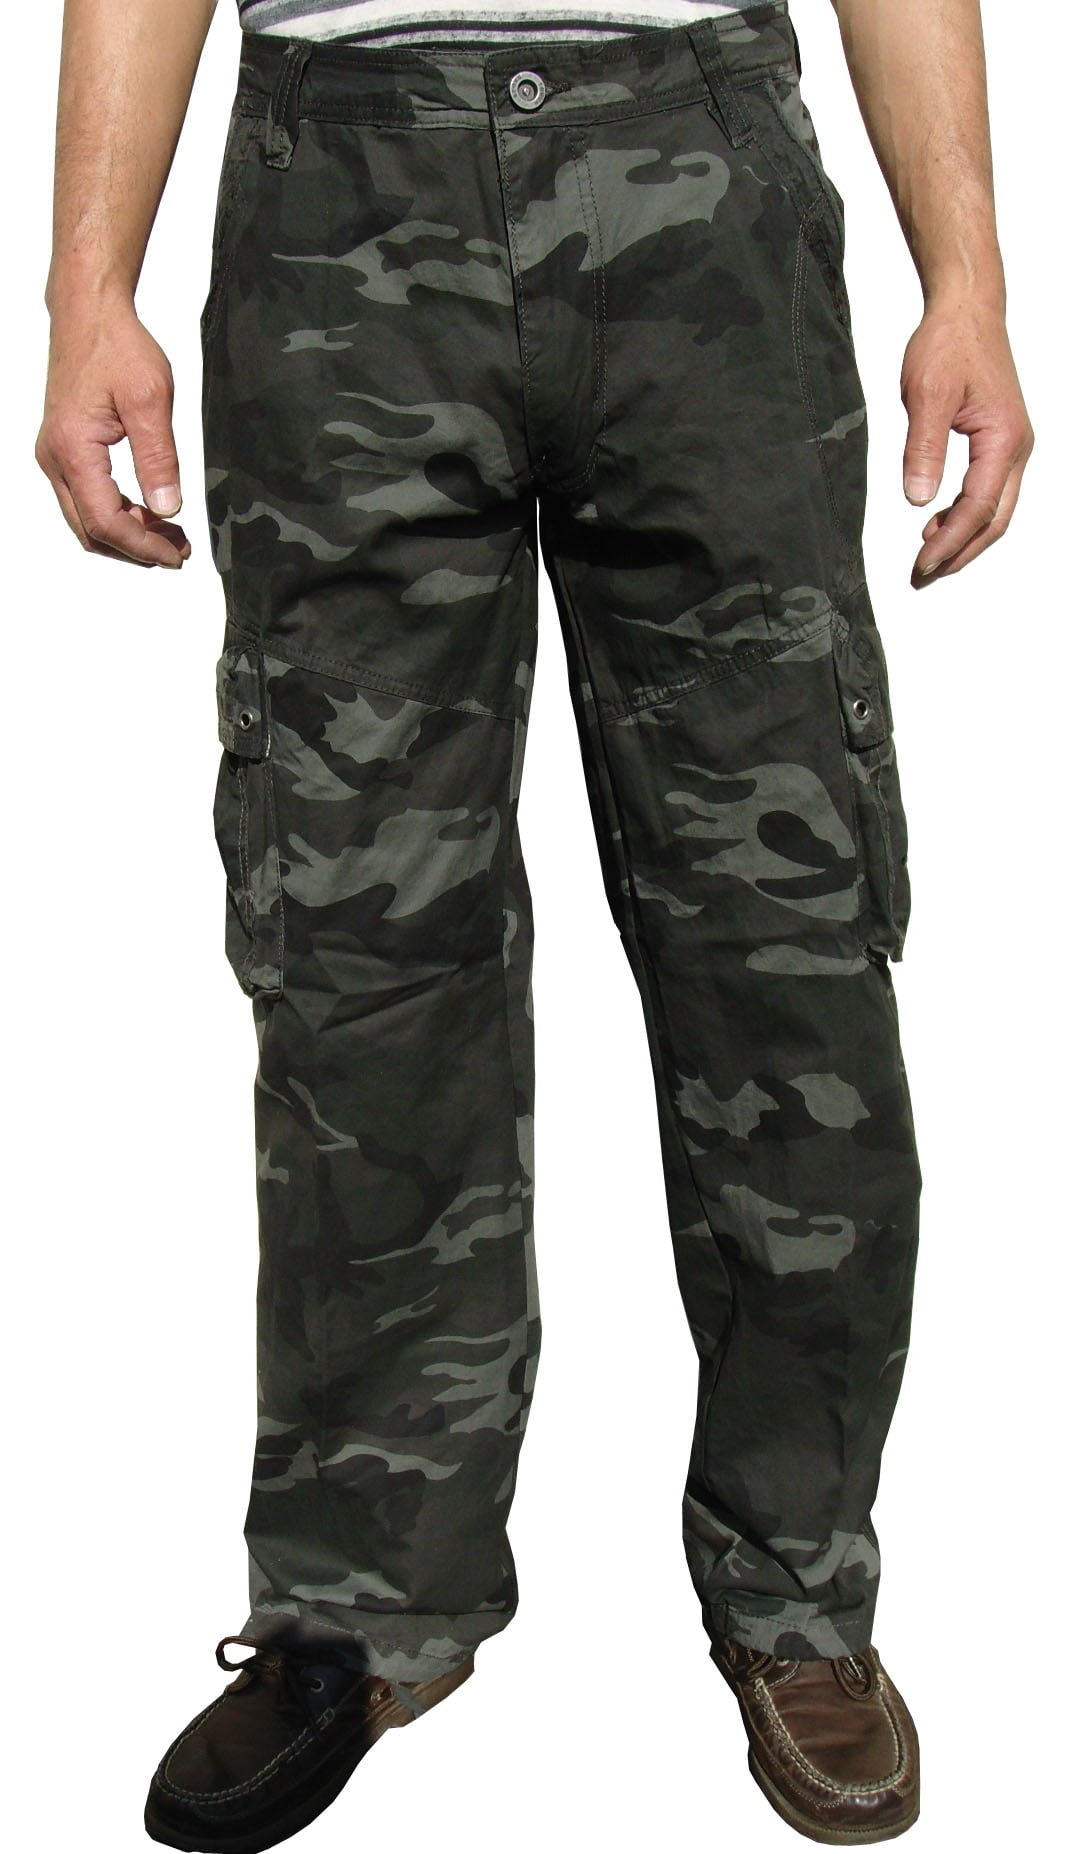 Mens Military-Style Camoflage Cargo Pants #27C3 38x34_JG - Walmart.com